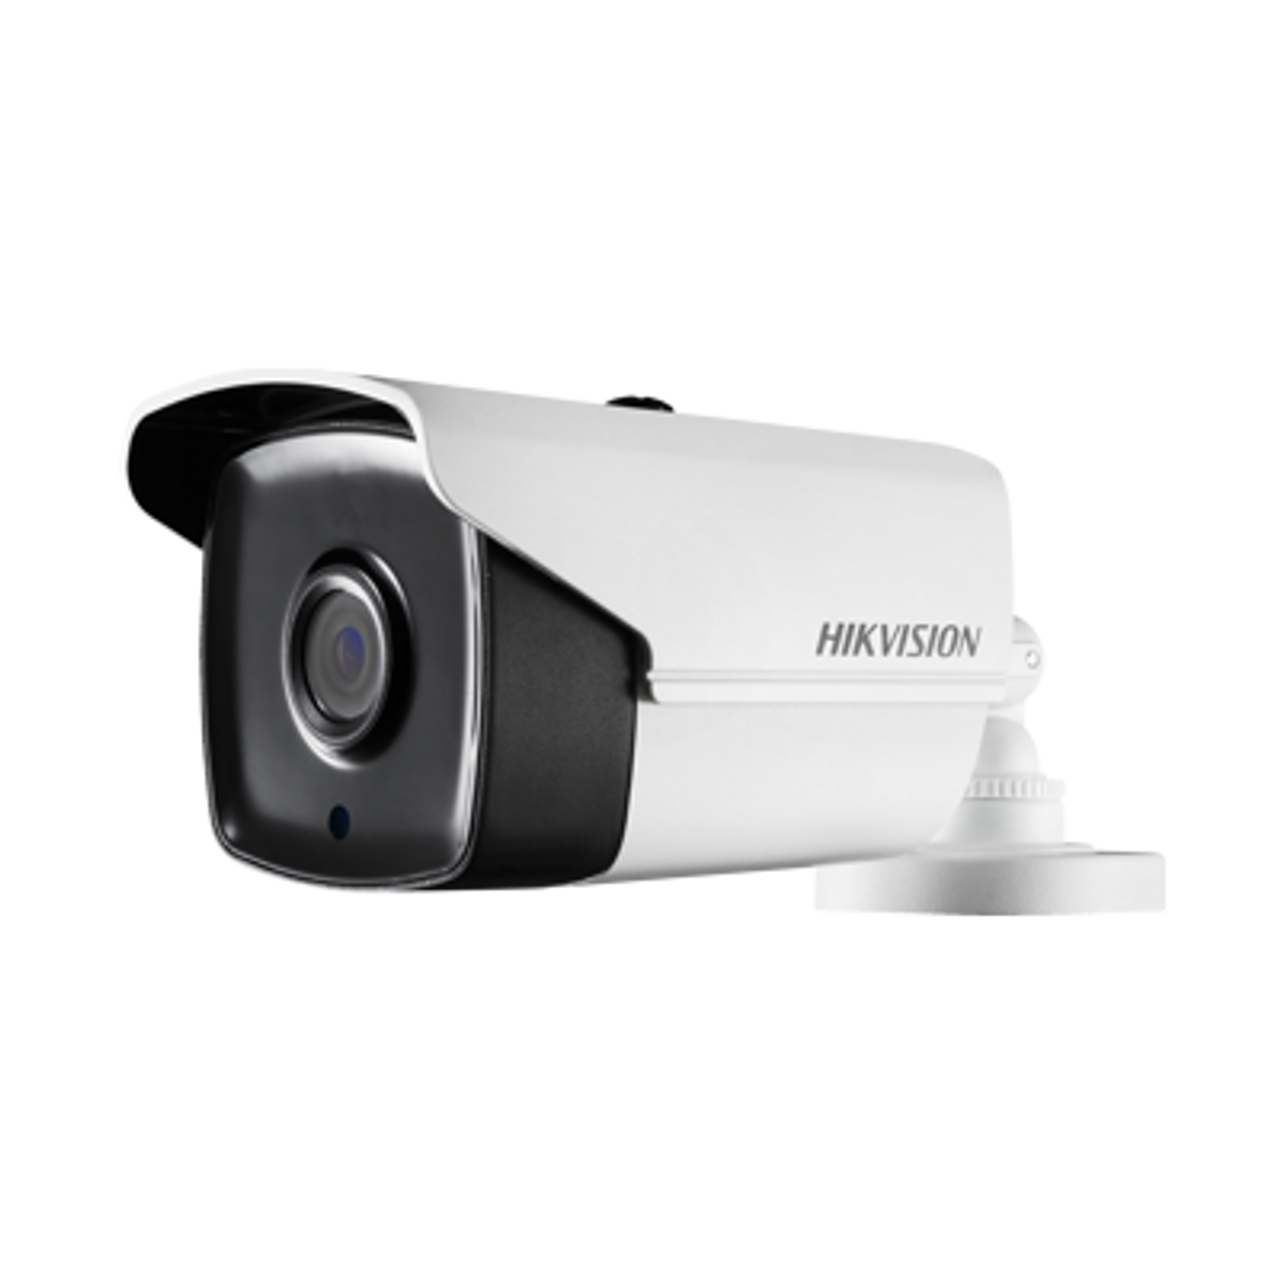 Hikvision DS-2CE16H0T-IT3E Turbo HD 5MP PoC EXIR Bullet Camera 3.6mm Lens